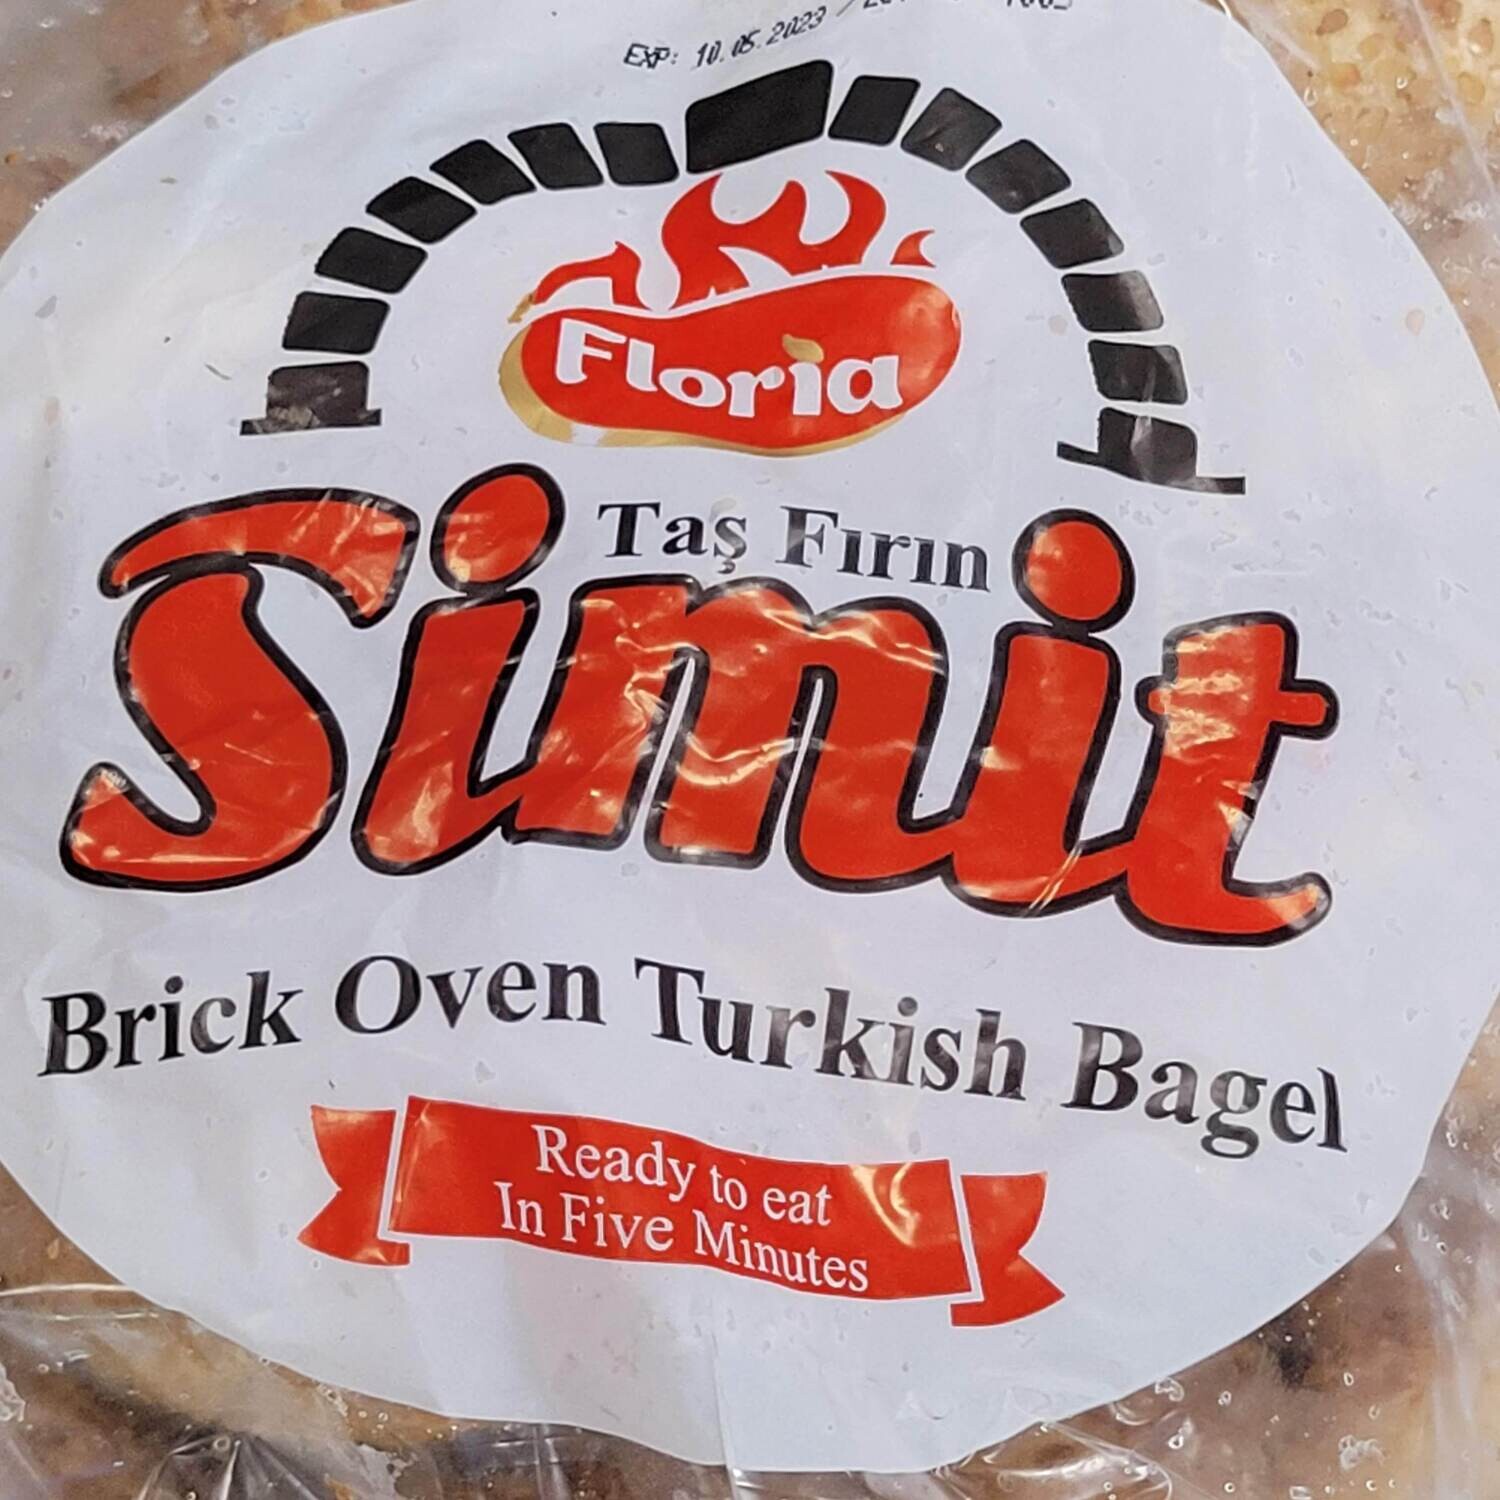 FLORIA Tas Firin Simit - Stone Baked Turkish Bagel 400g (100g x 4pcs)